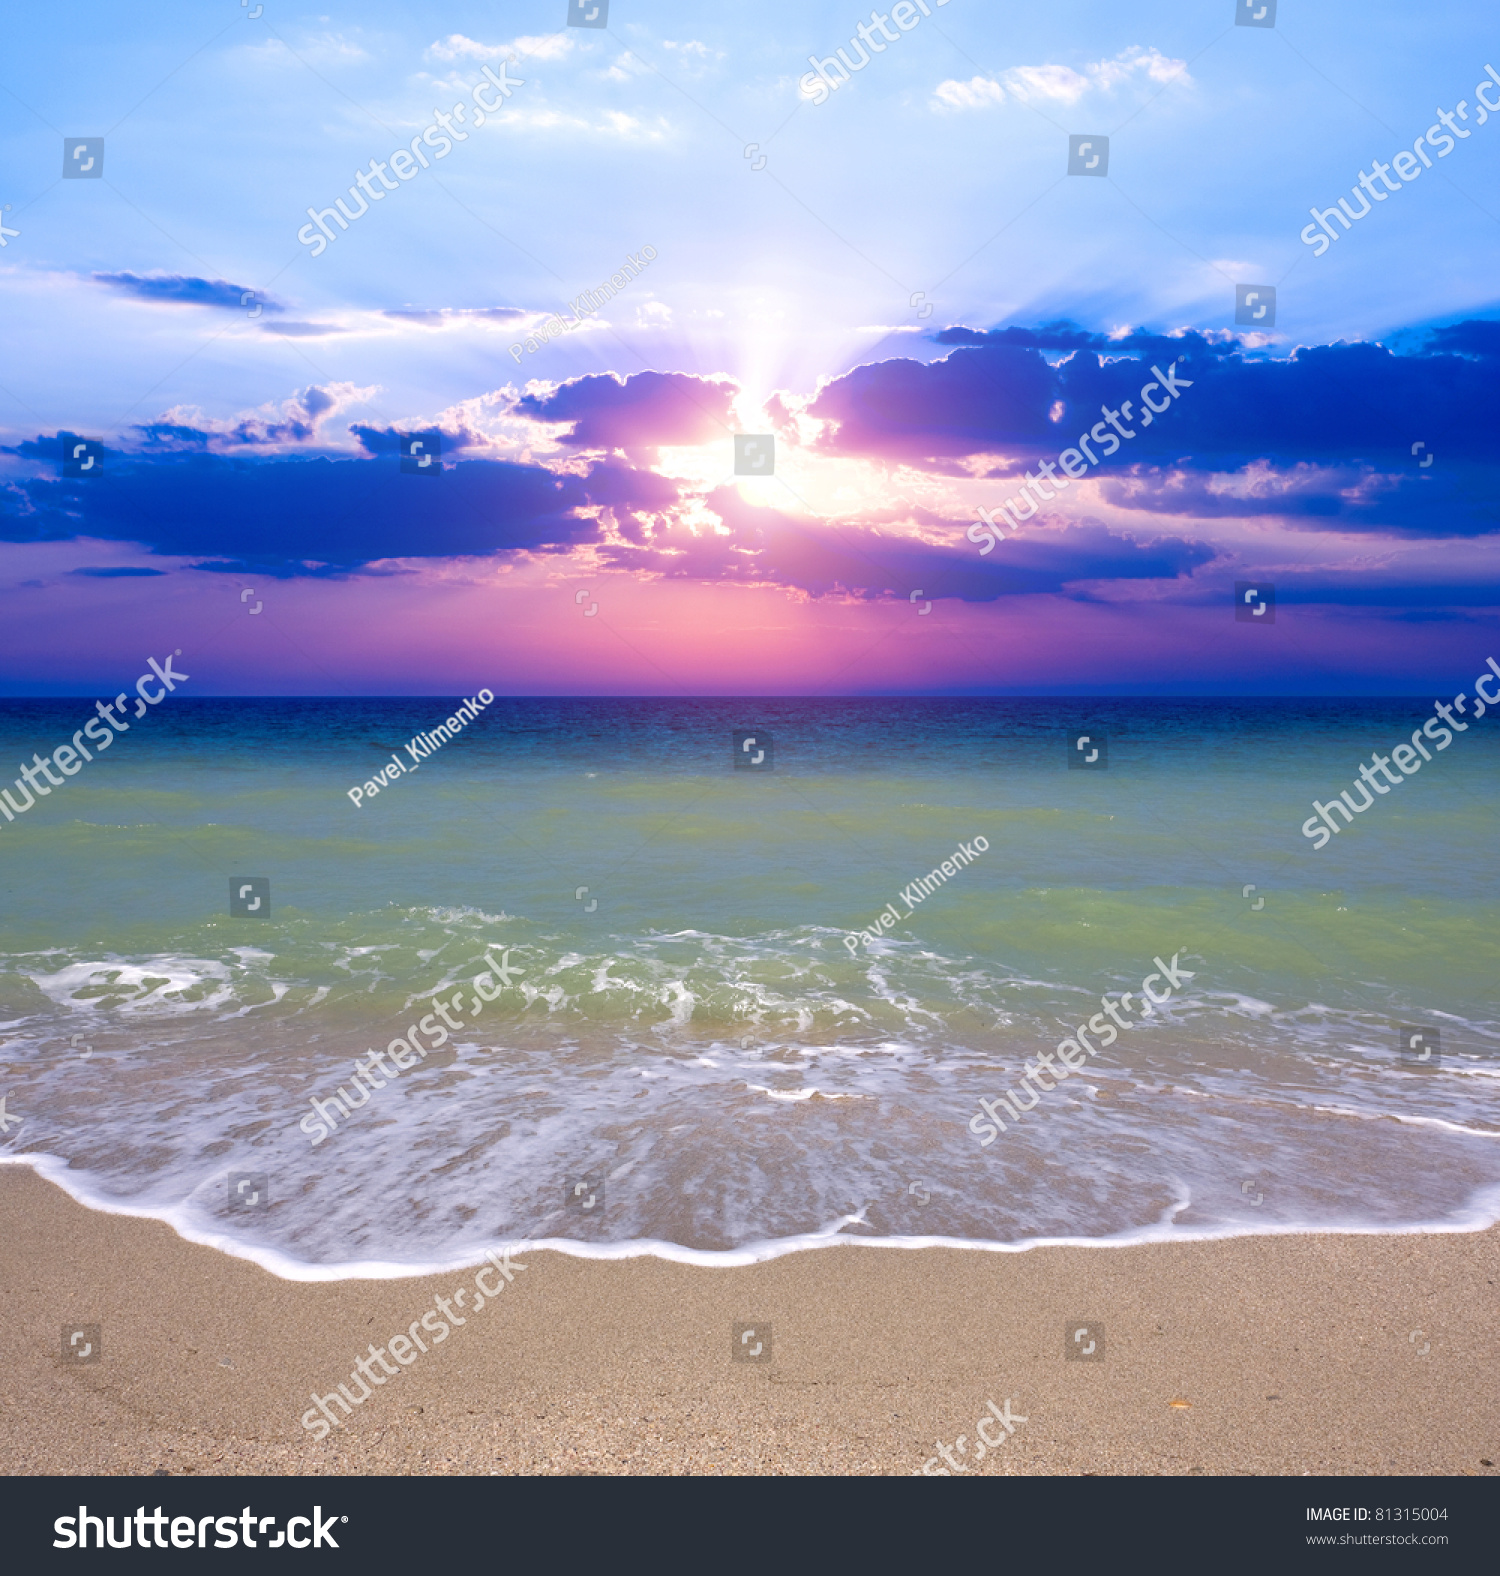 Nice sunset over sea beach #81315004